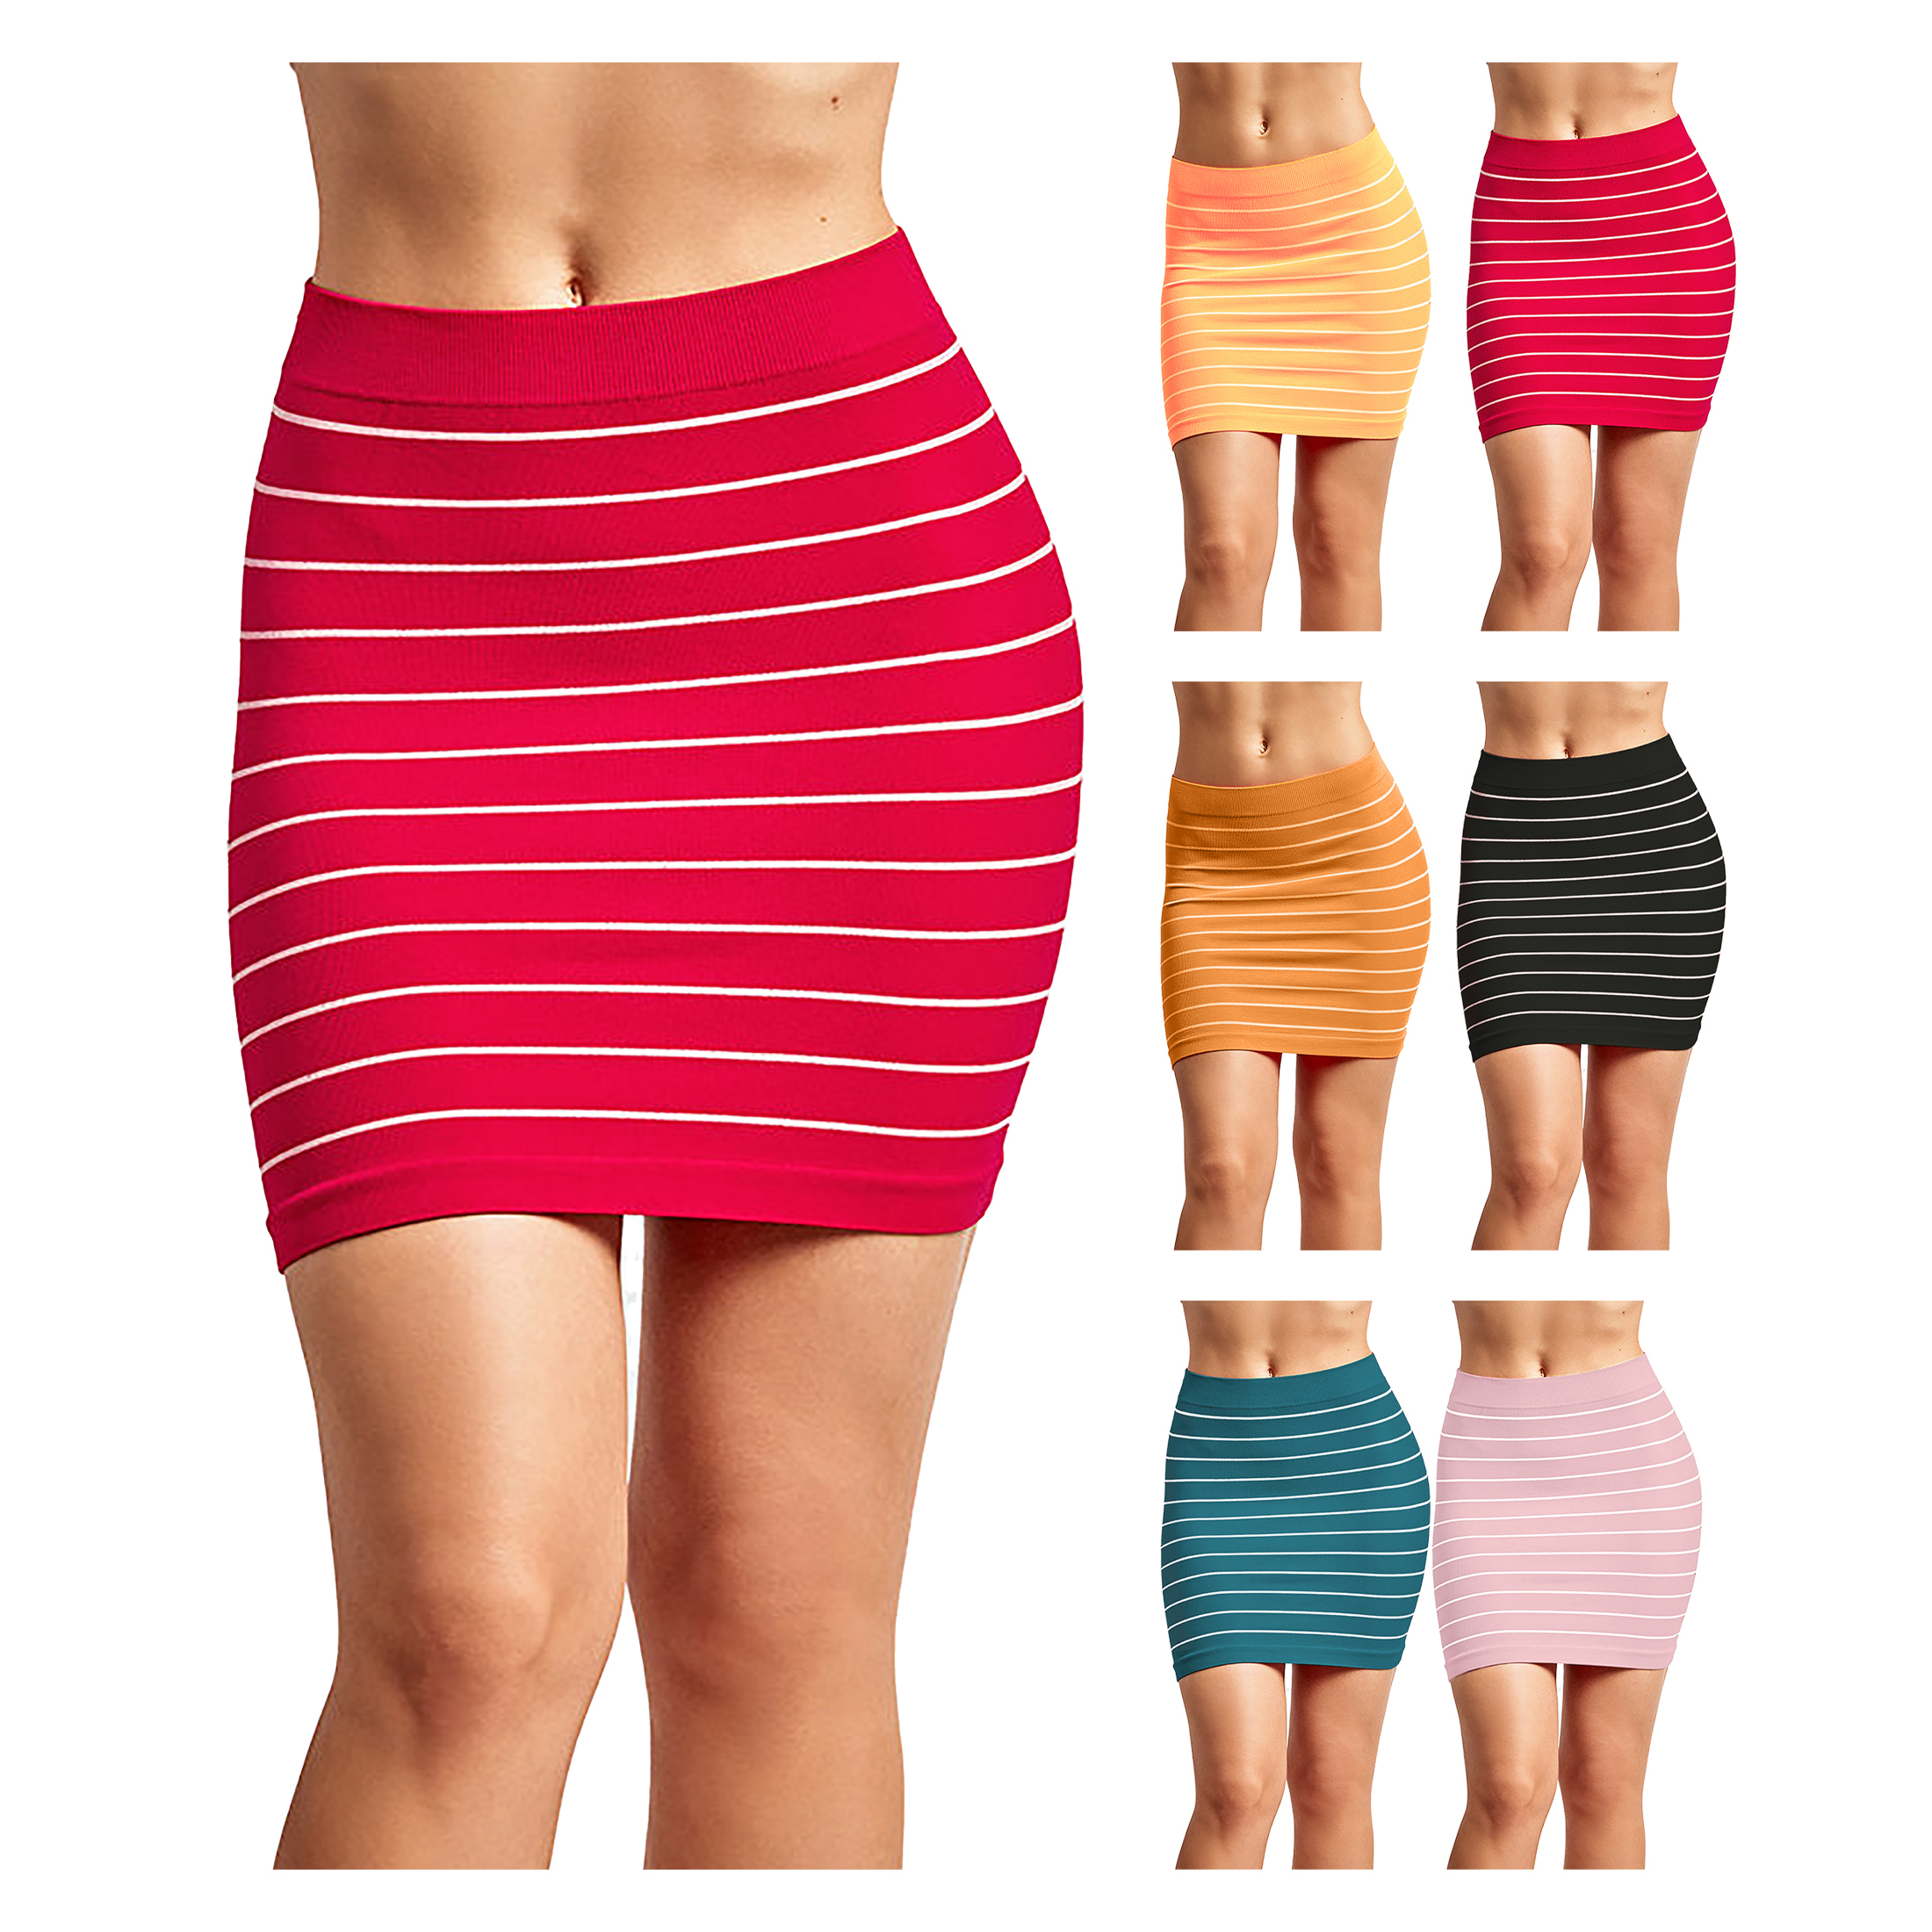 3-Pack: Women's Striped Seamless Microfiber Slim Nylon Pull-On Closure Mini Skirts - X-Small